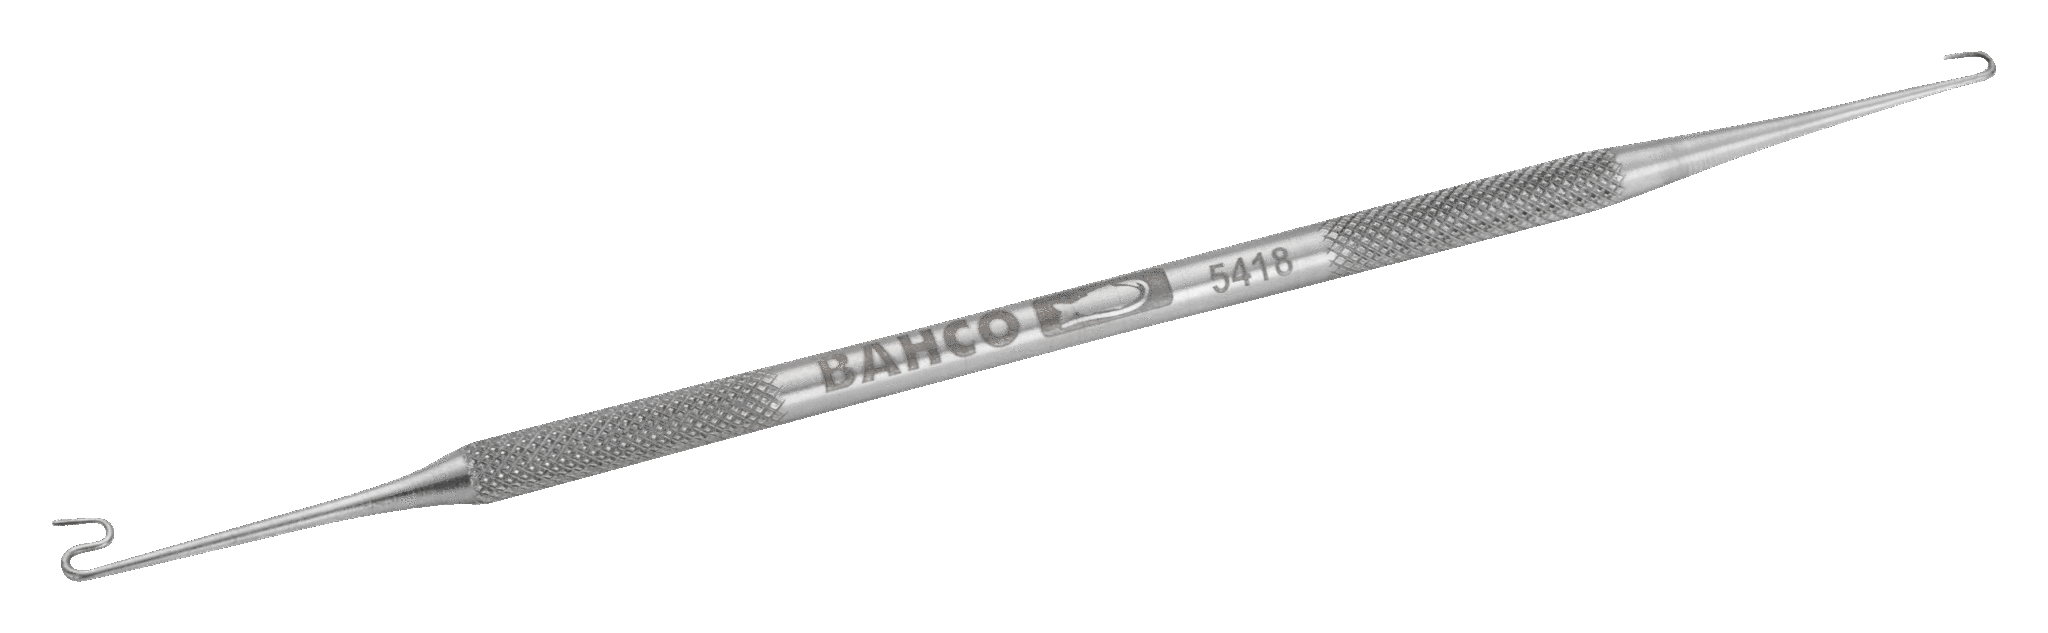 картинка Крючок двусторонний для захвата и укладки проводников BAHCO 5418 от магазина "Элит-инструмент"